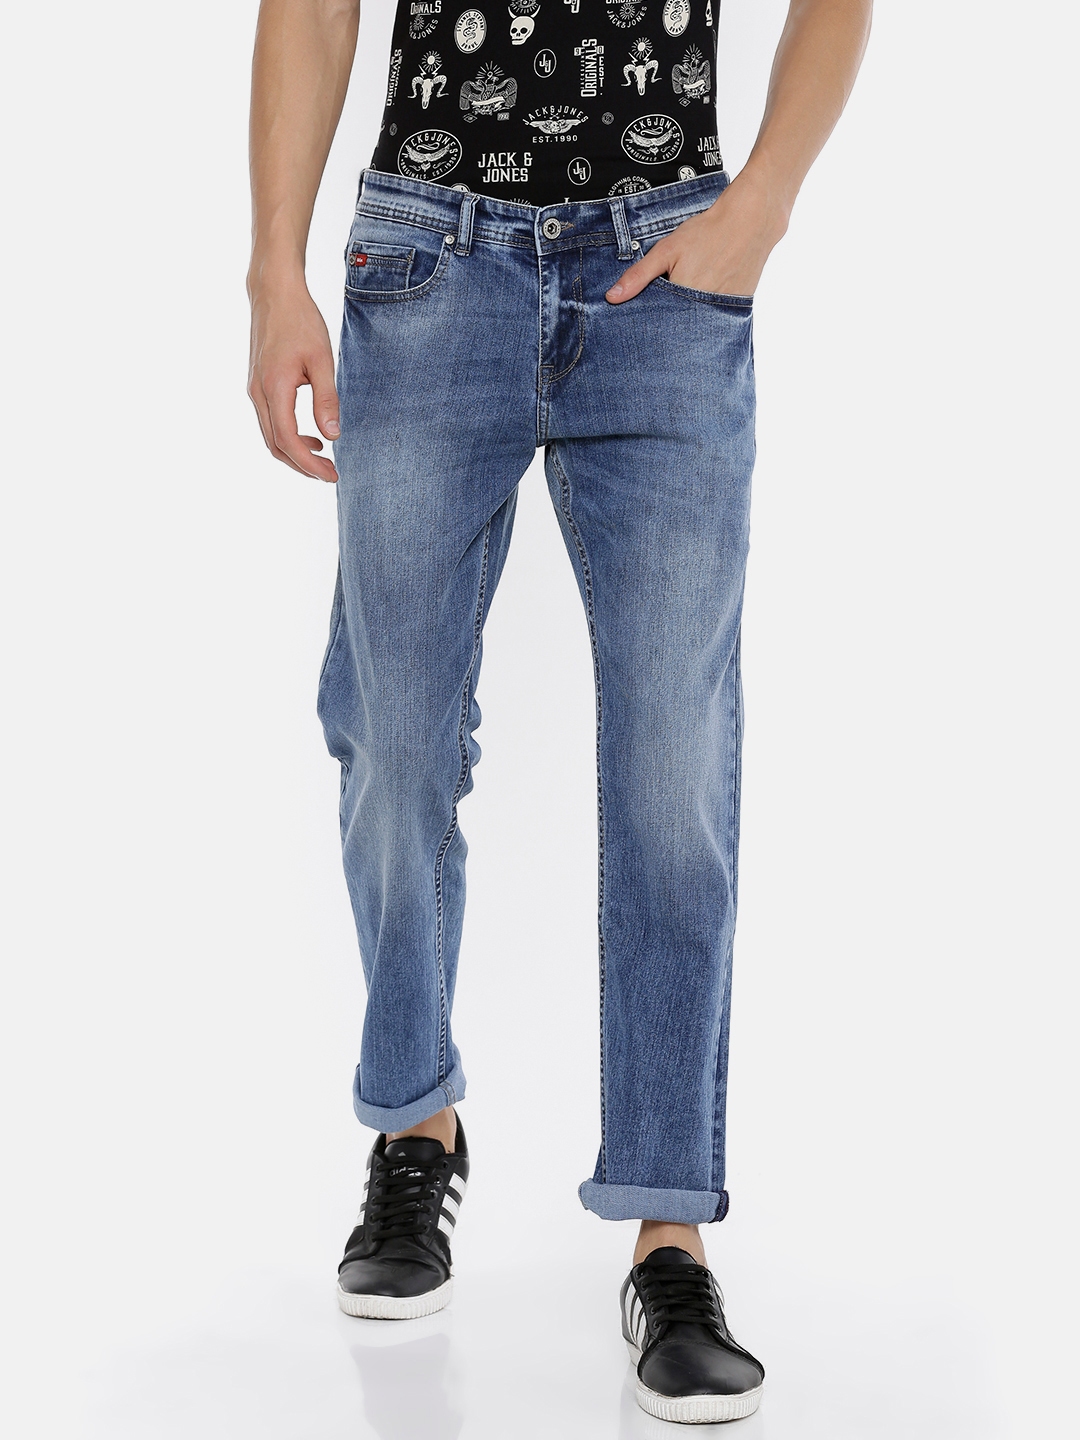 lee cooper jeans myntra